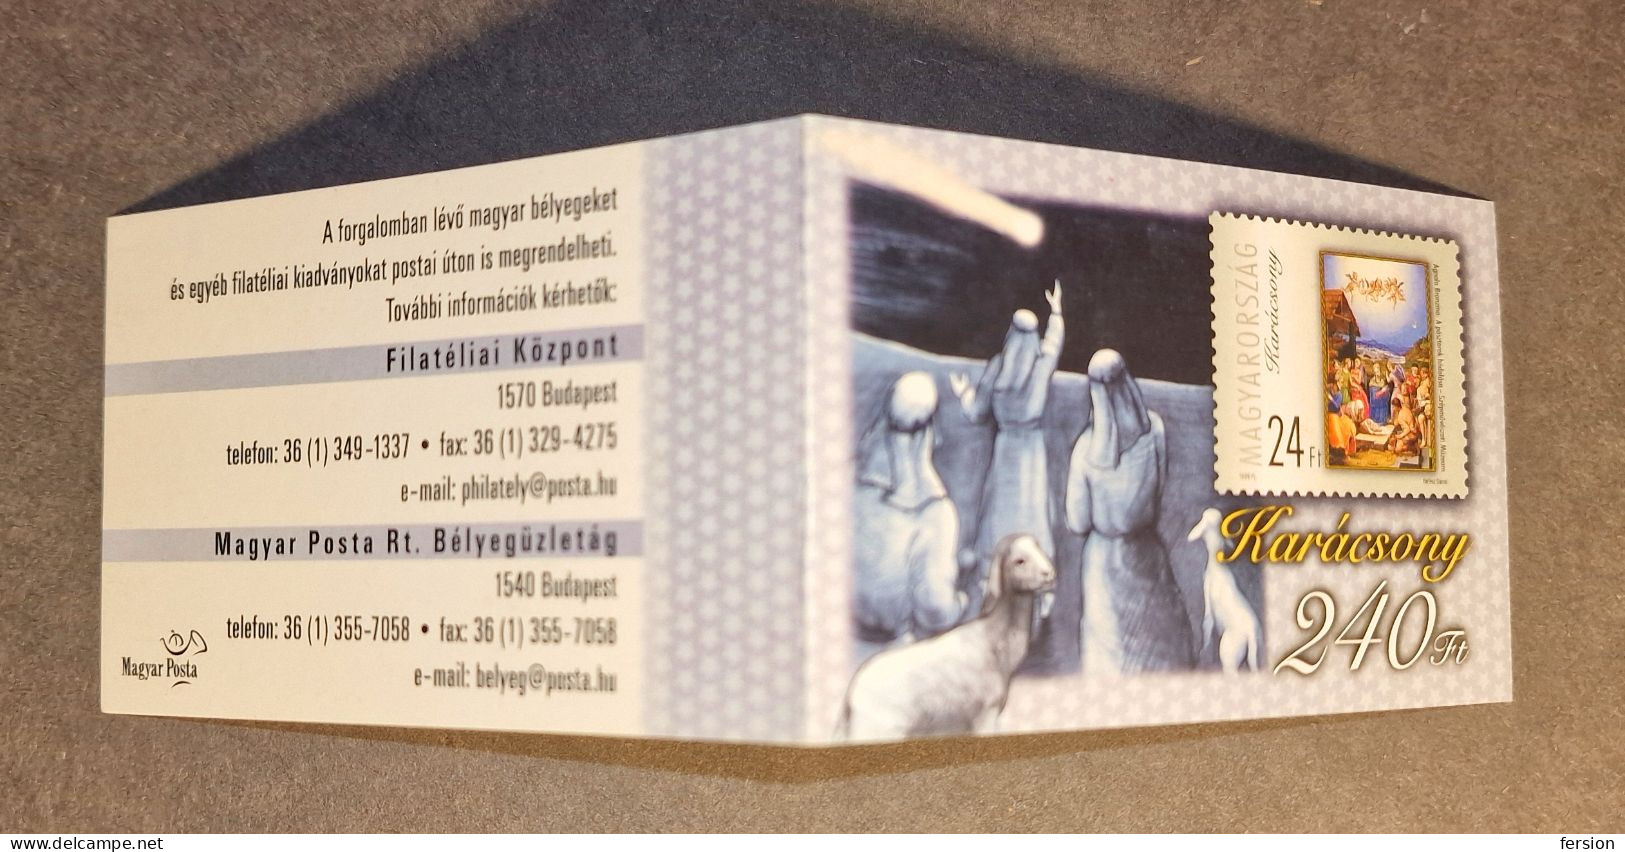 1999 Hungary CHRISTMAS Bethlehem BOOKLET 240 Ft Comet Three Kings Sheep Jesus Mary Agnolo Bronzino ITALY Renaissance - Booklets